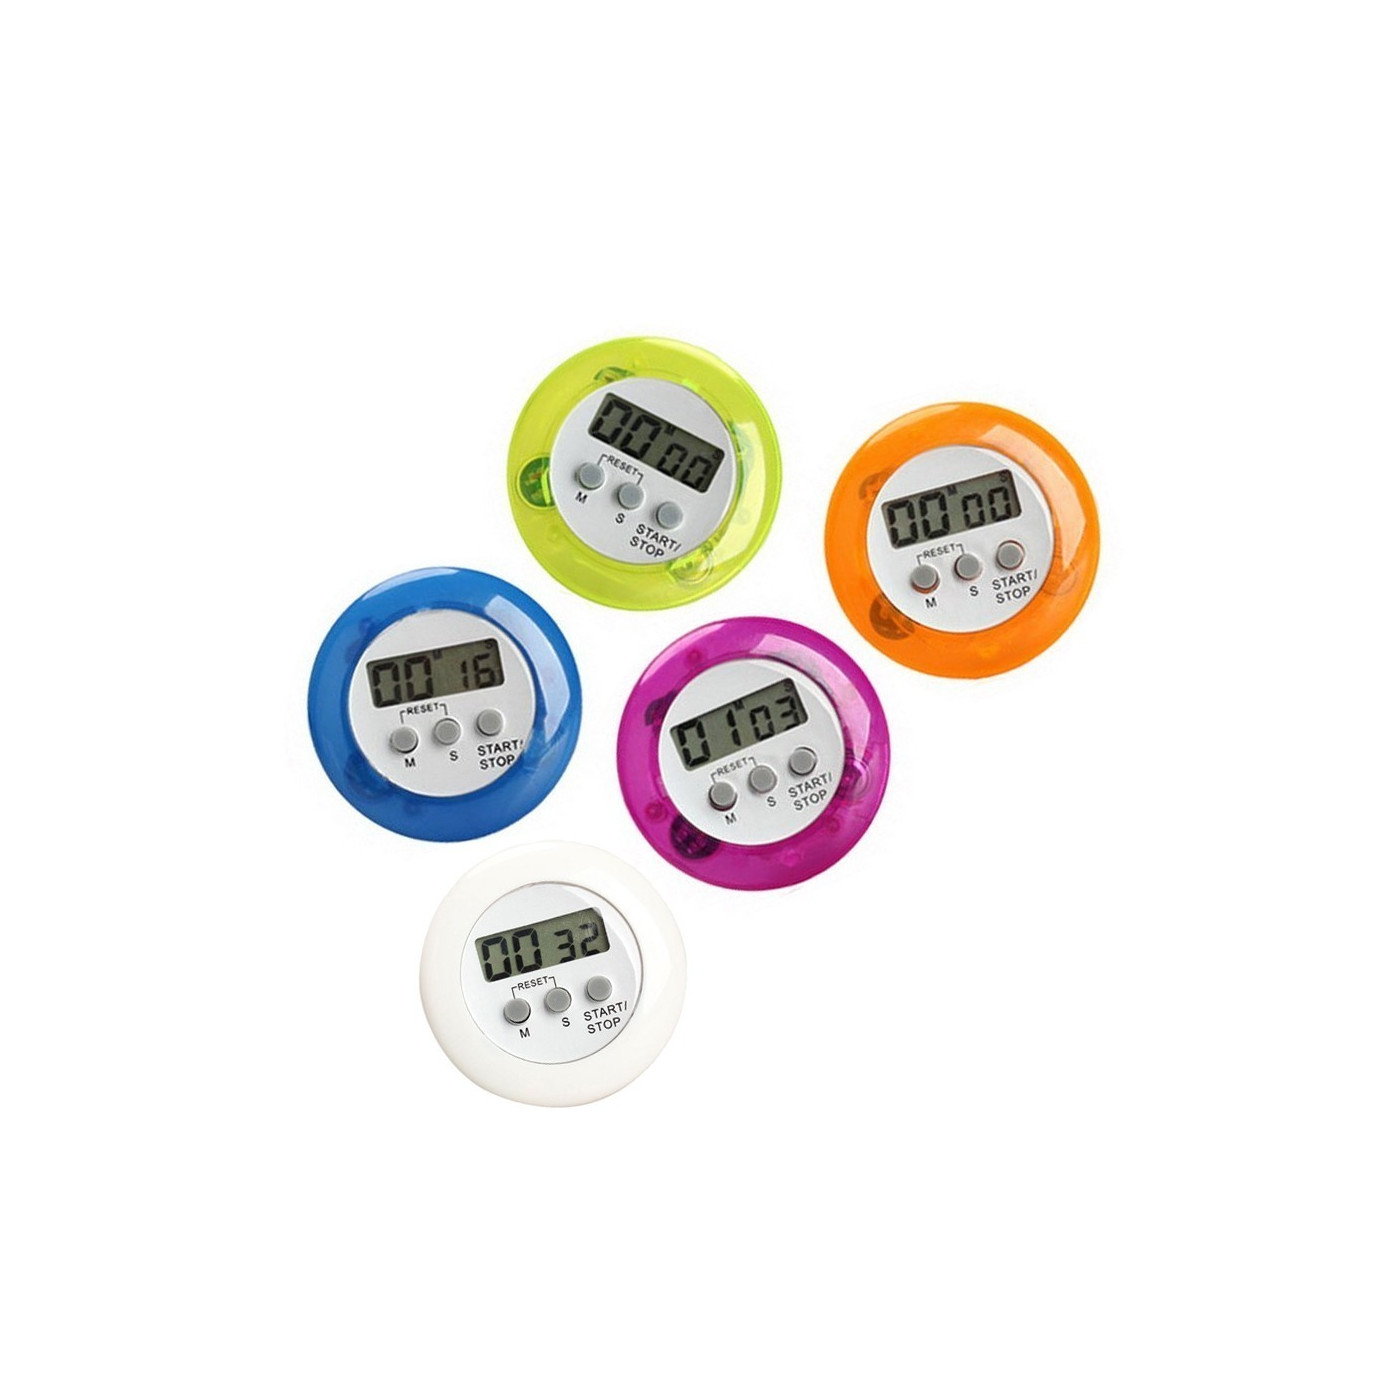 Set of 5 colorful kitchen timers, alarm clocks